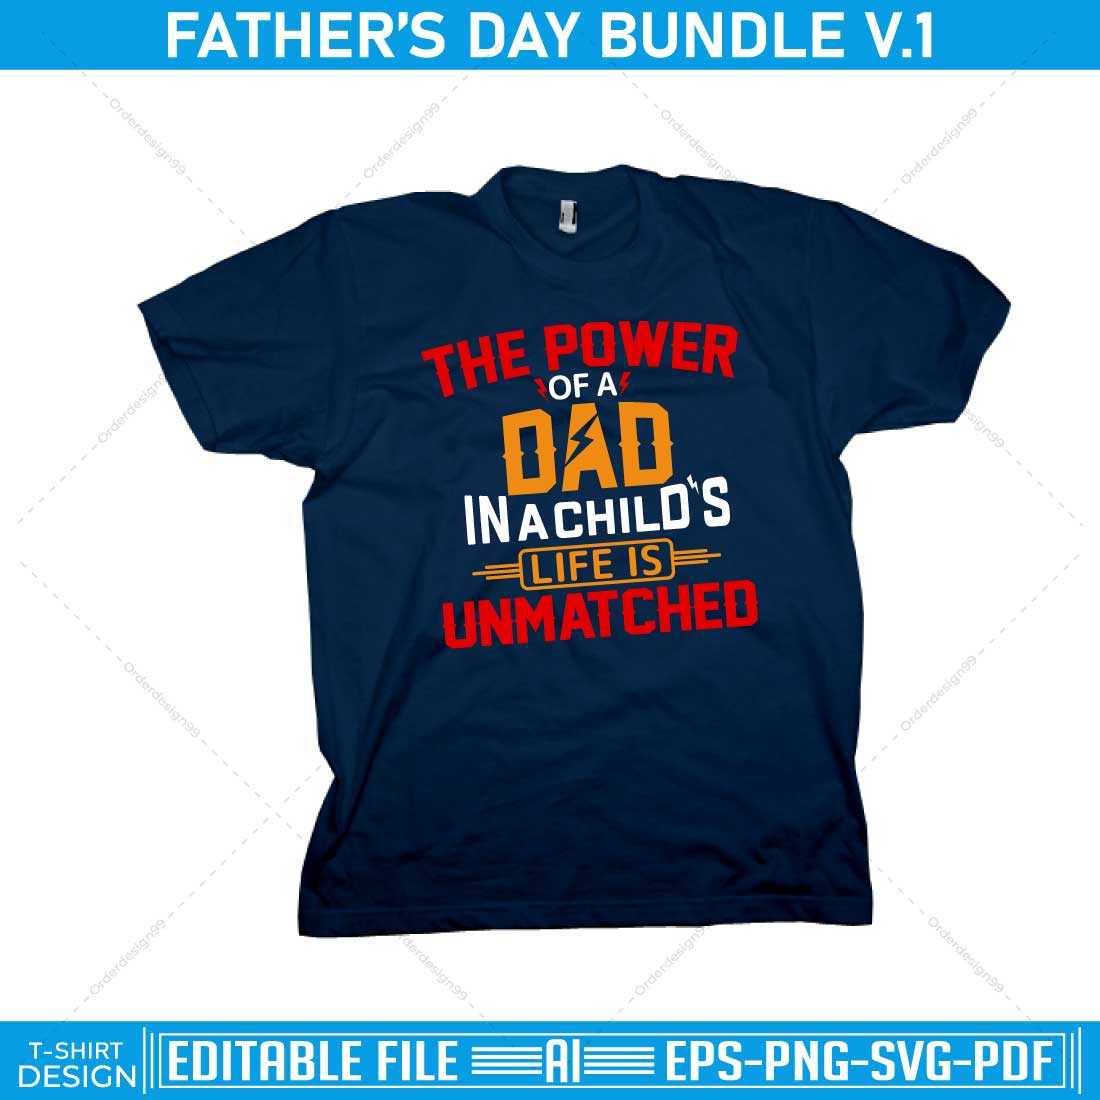 fathers day t shirt bundle v.1 social media 996